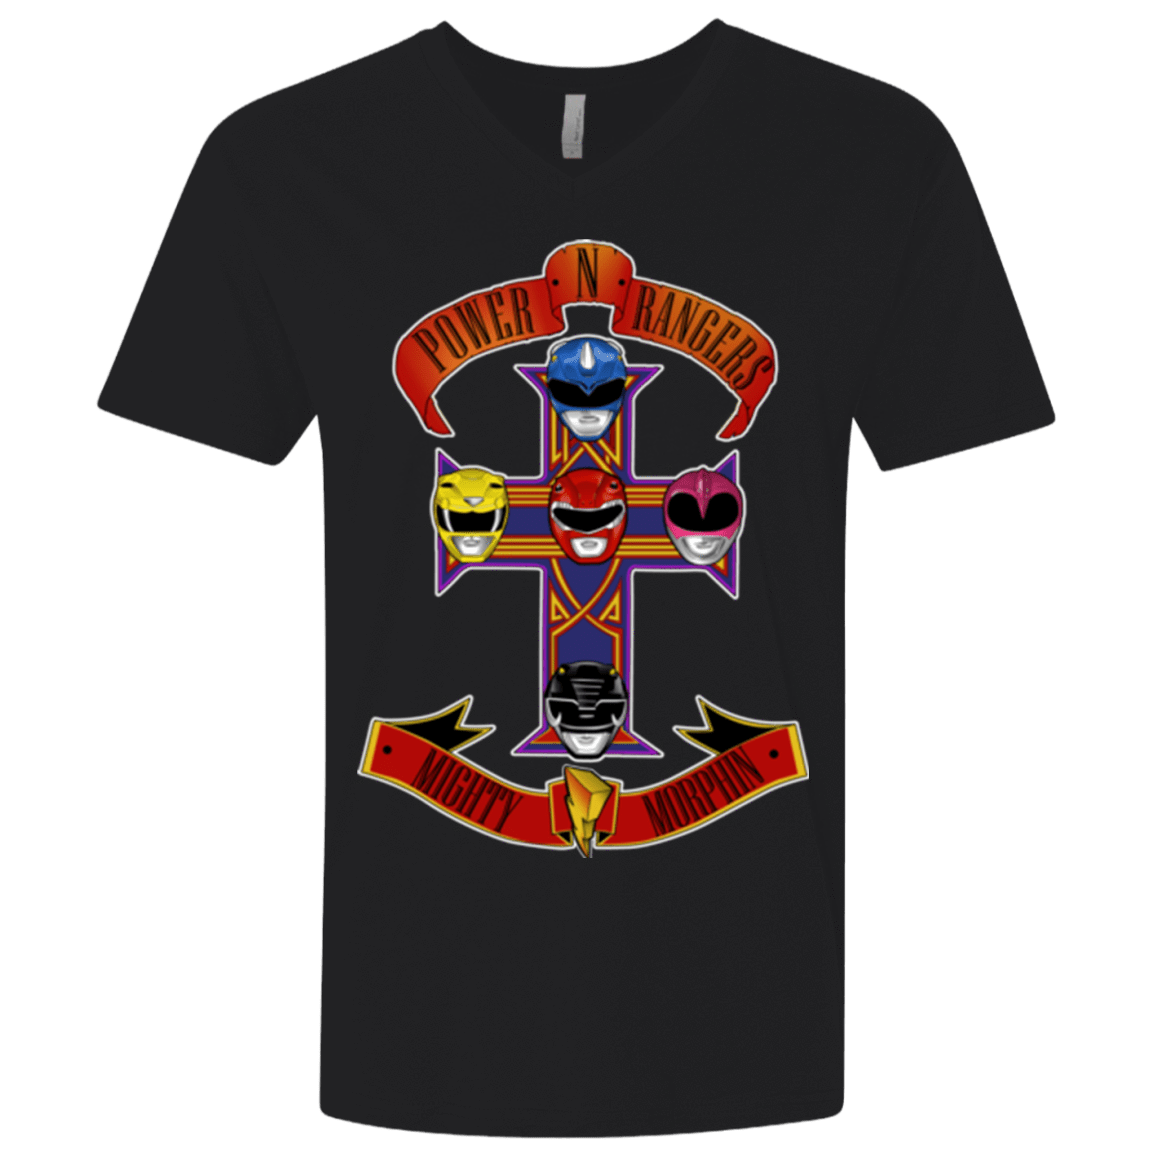 T-Shirts Black / X-Small Power N Rangers Men's Premium V-Neck